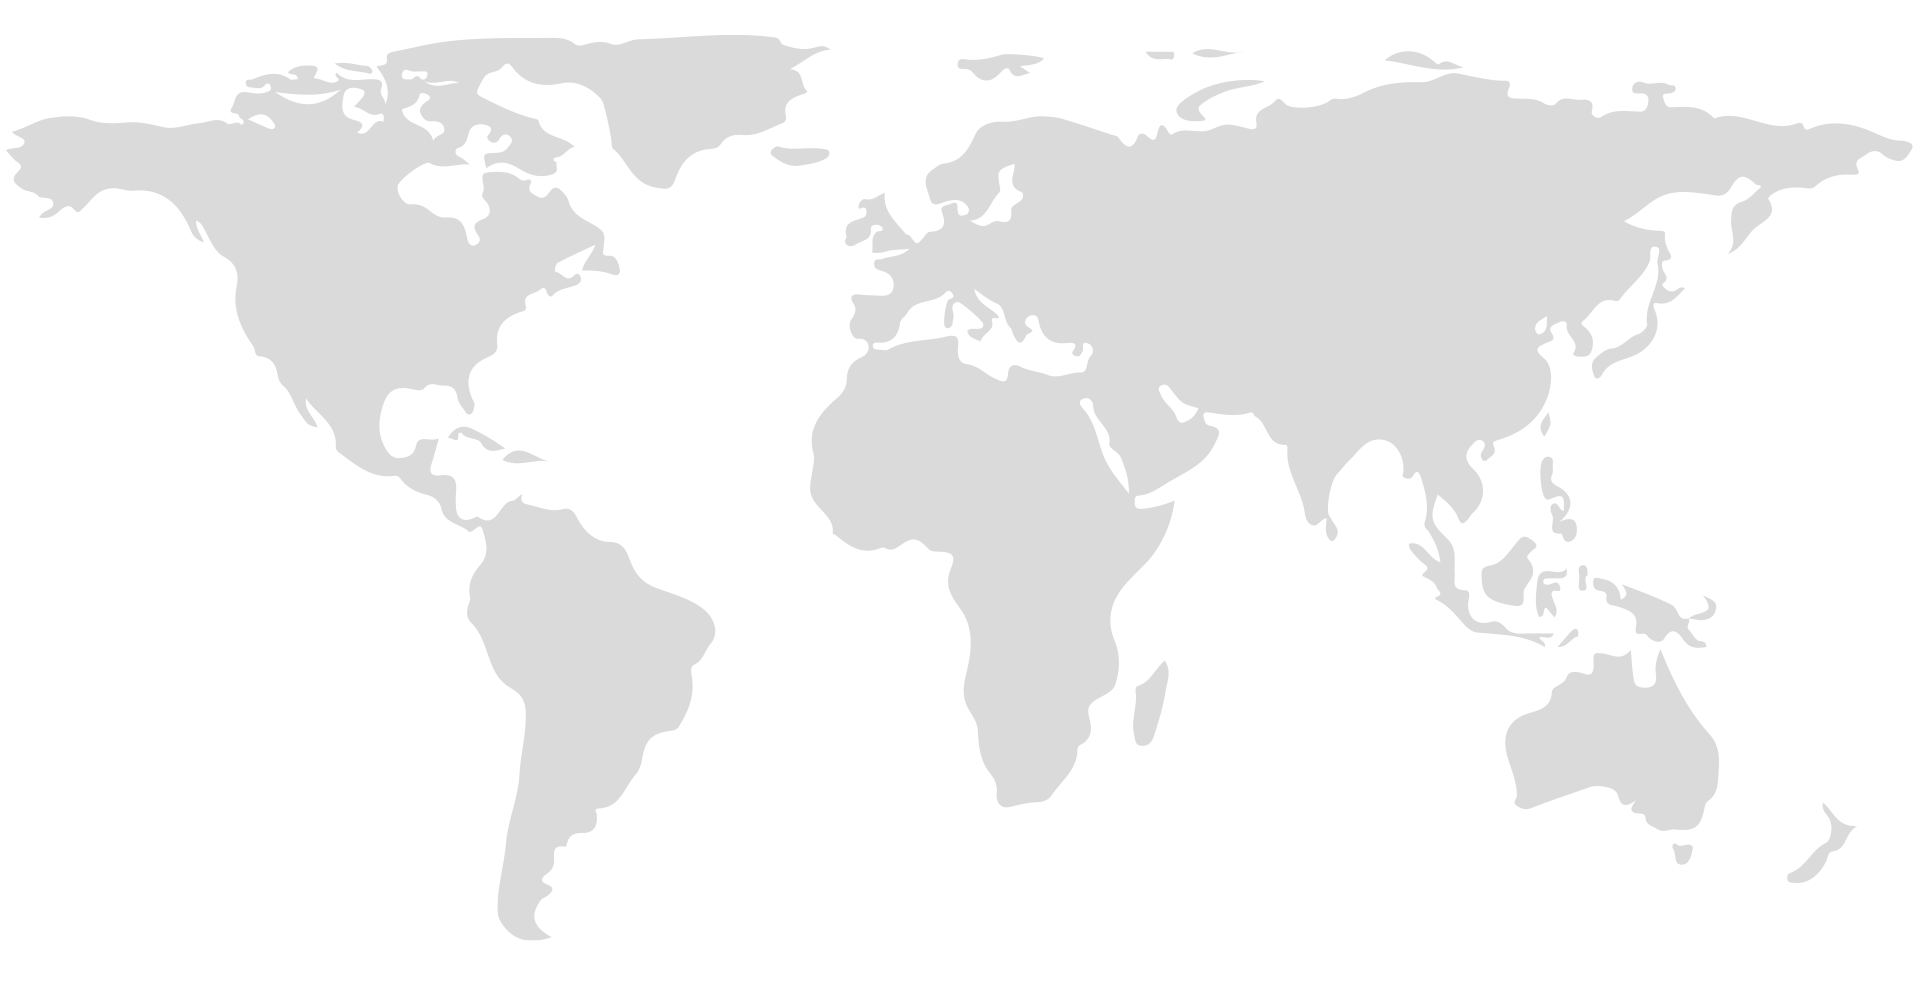 cartina del mondo